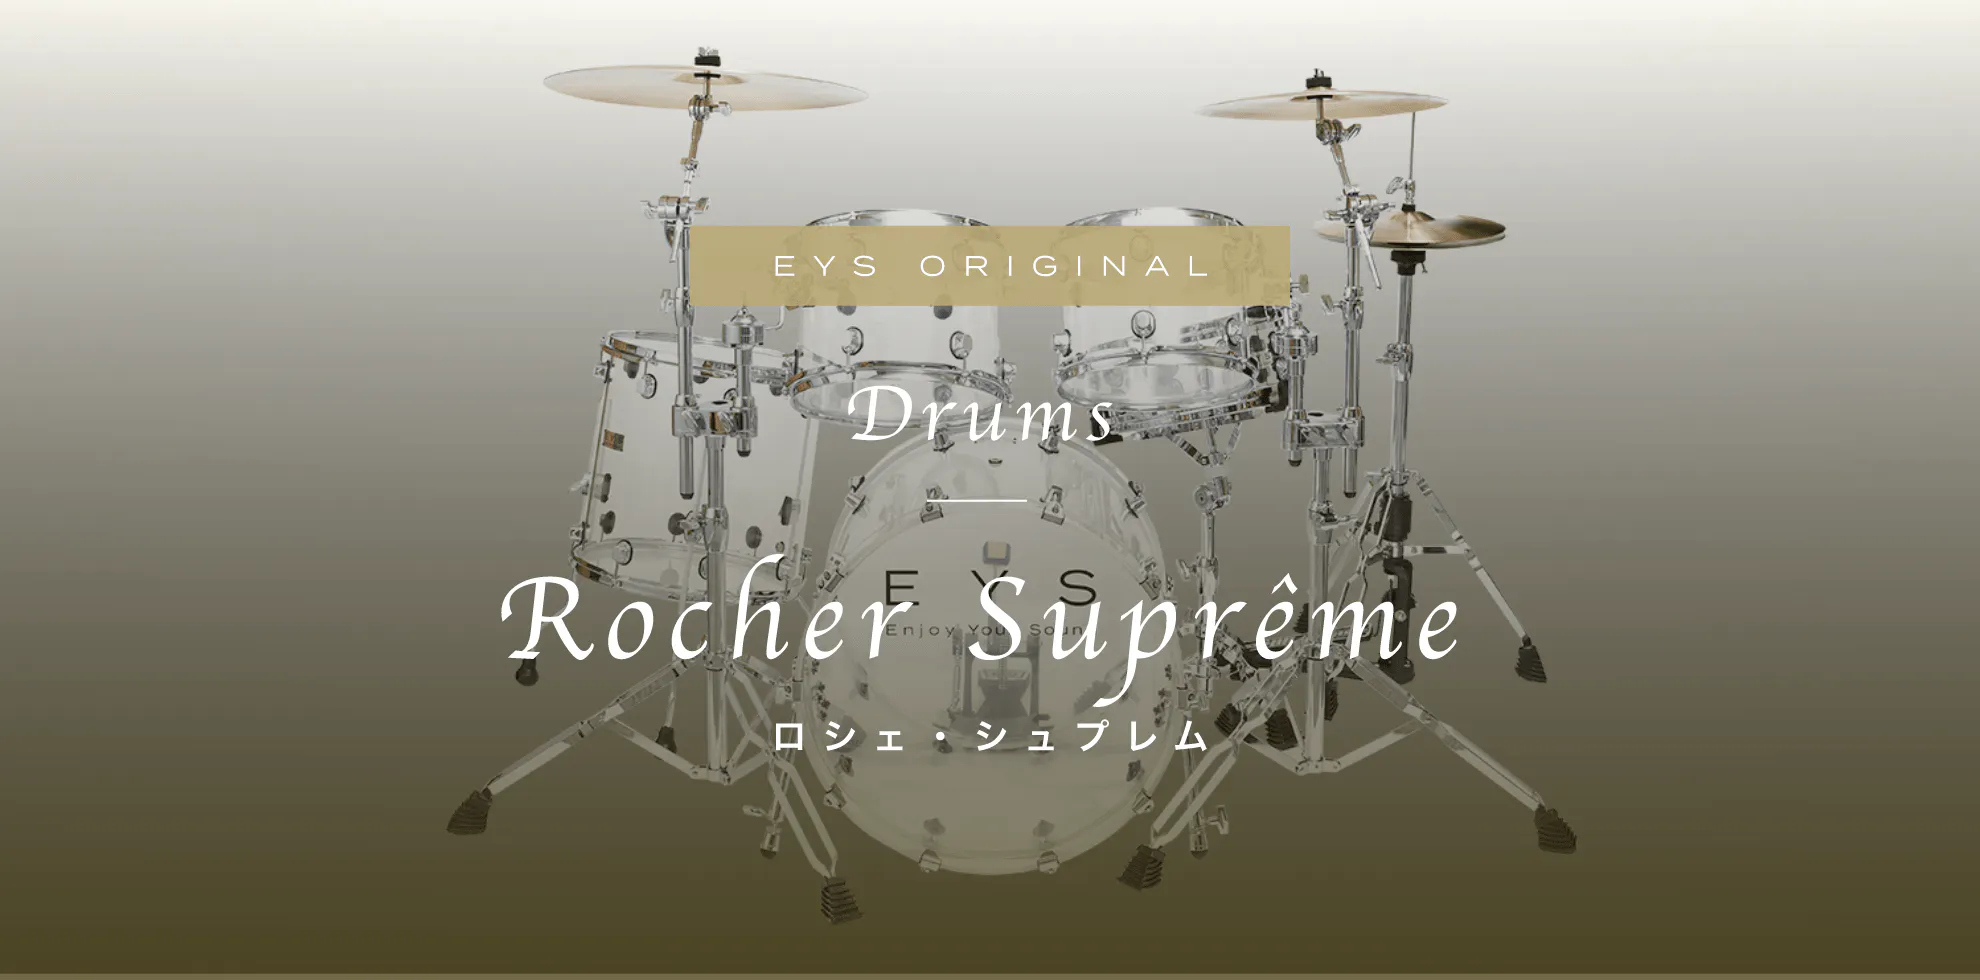 EYS ORIGINAL Drums Rocher Suprême ロシェ・シュプレム